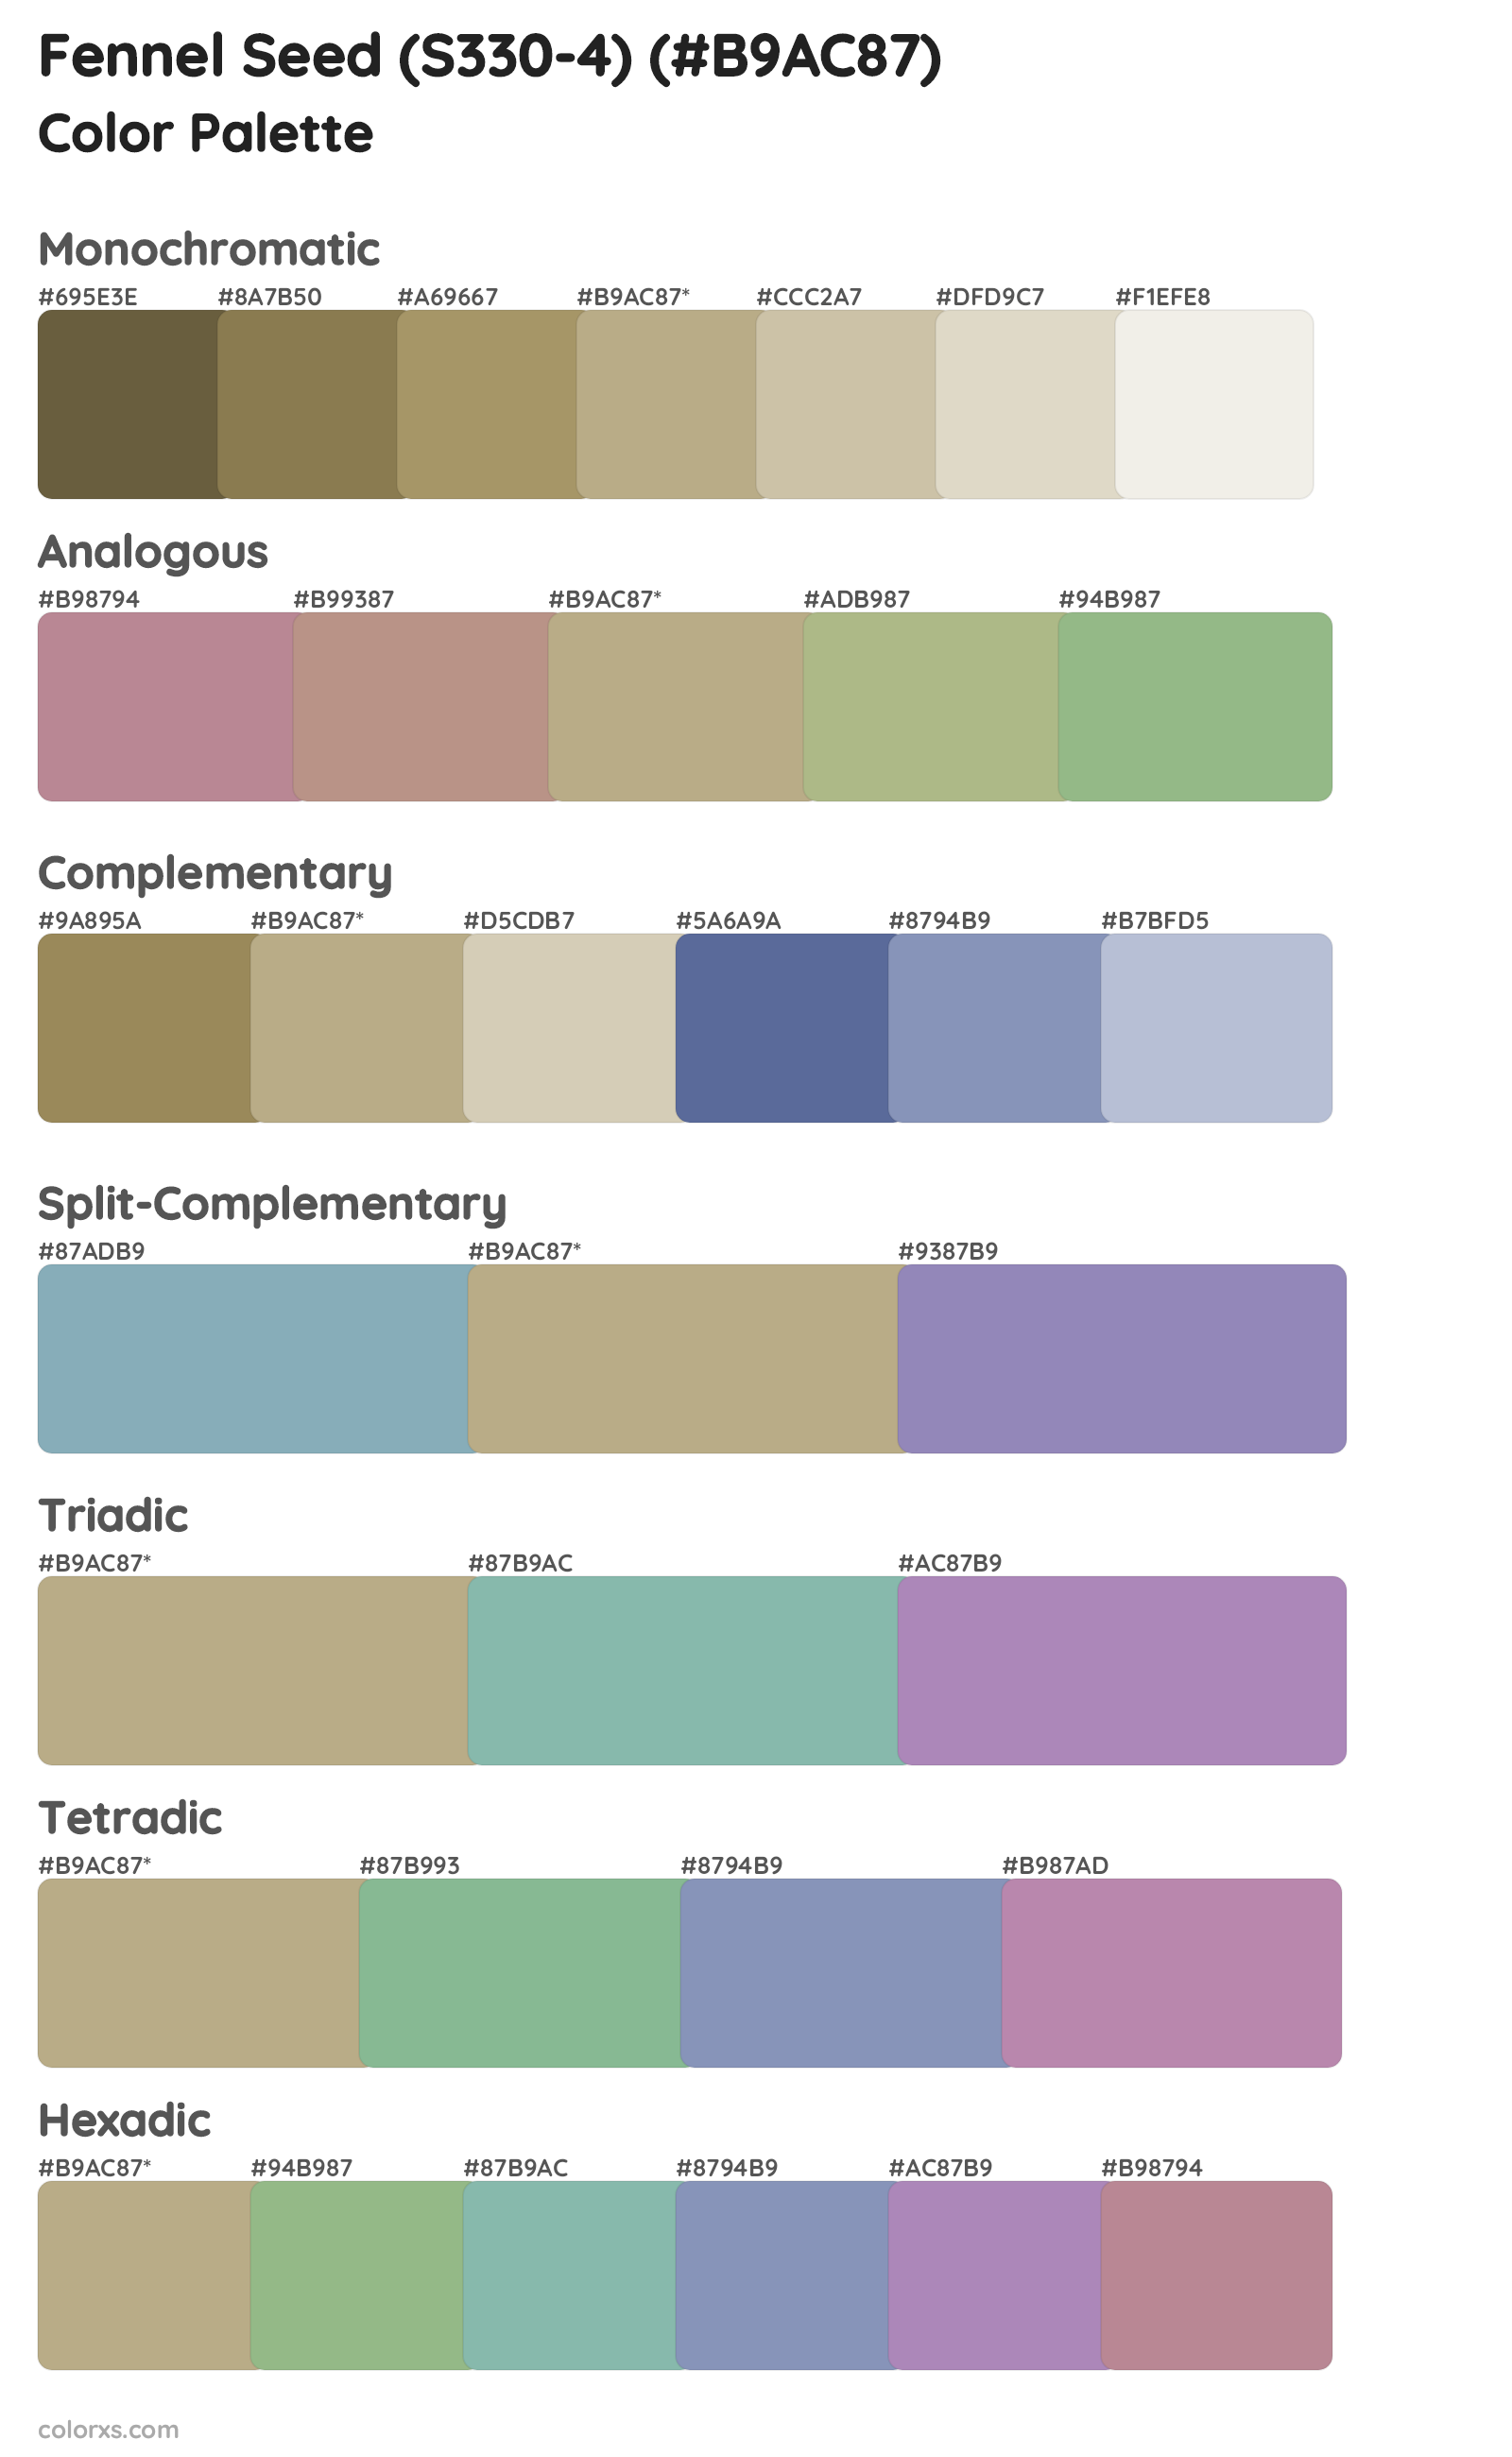 Fennel Seed (S330-4) Color Scheme Palettes